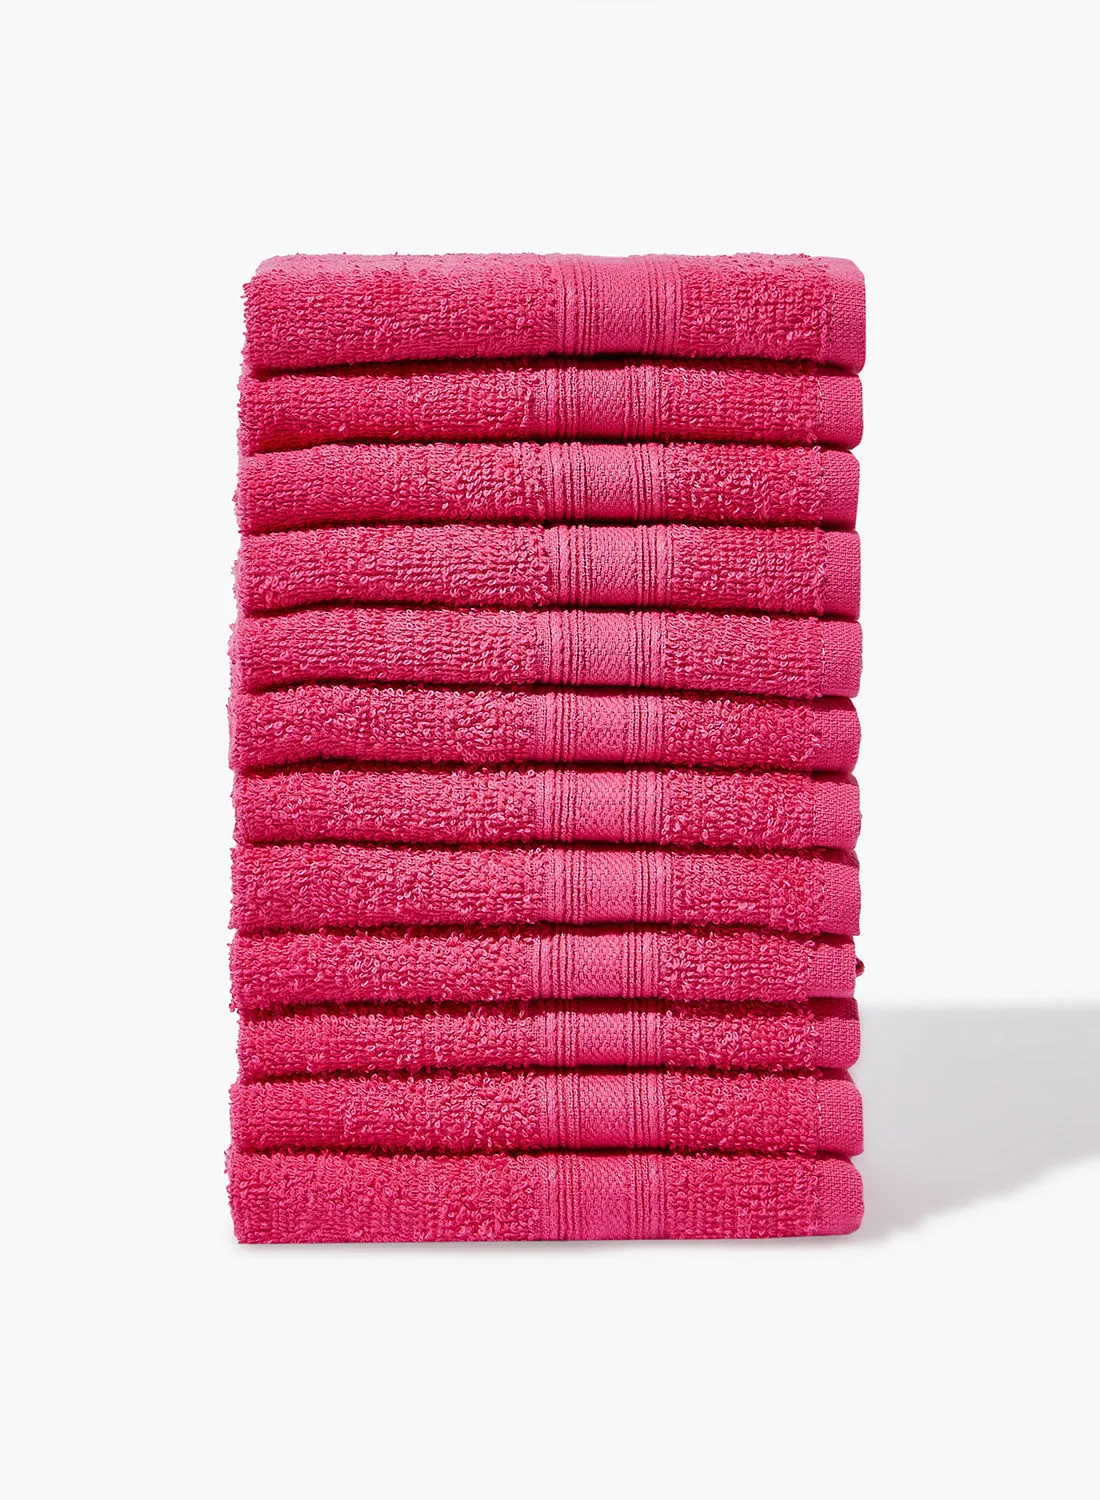 Amal 12 Piece Bathroom Towel Set - 400 GSM 100% Cotton Terry - 12 Face Towel - Fuchsia Color -Quick Dry - Super Absorbent